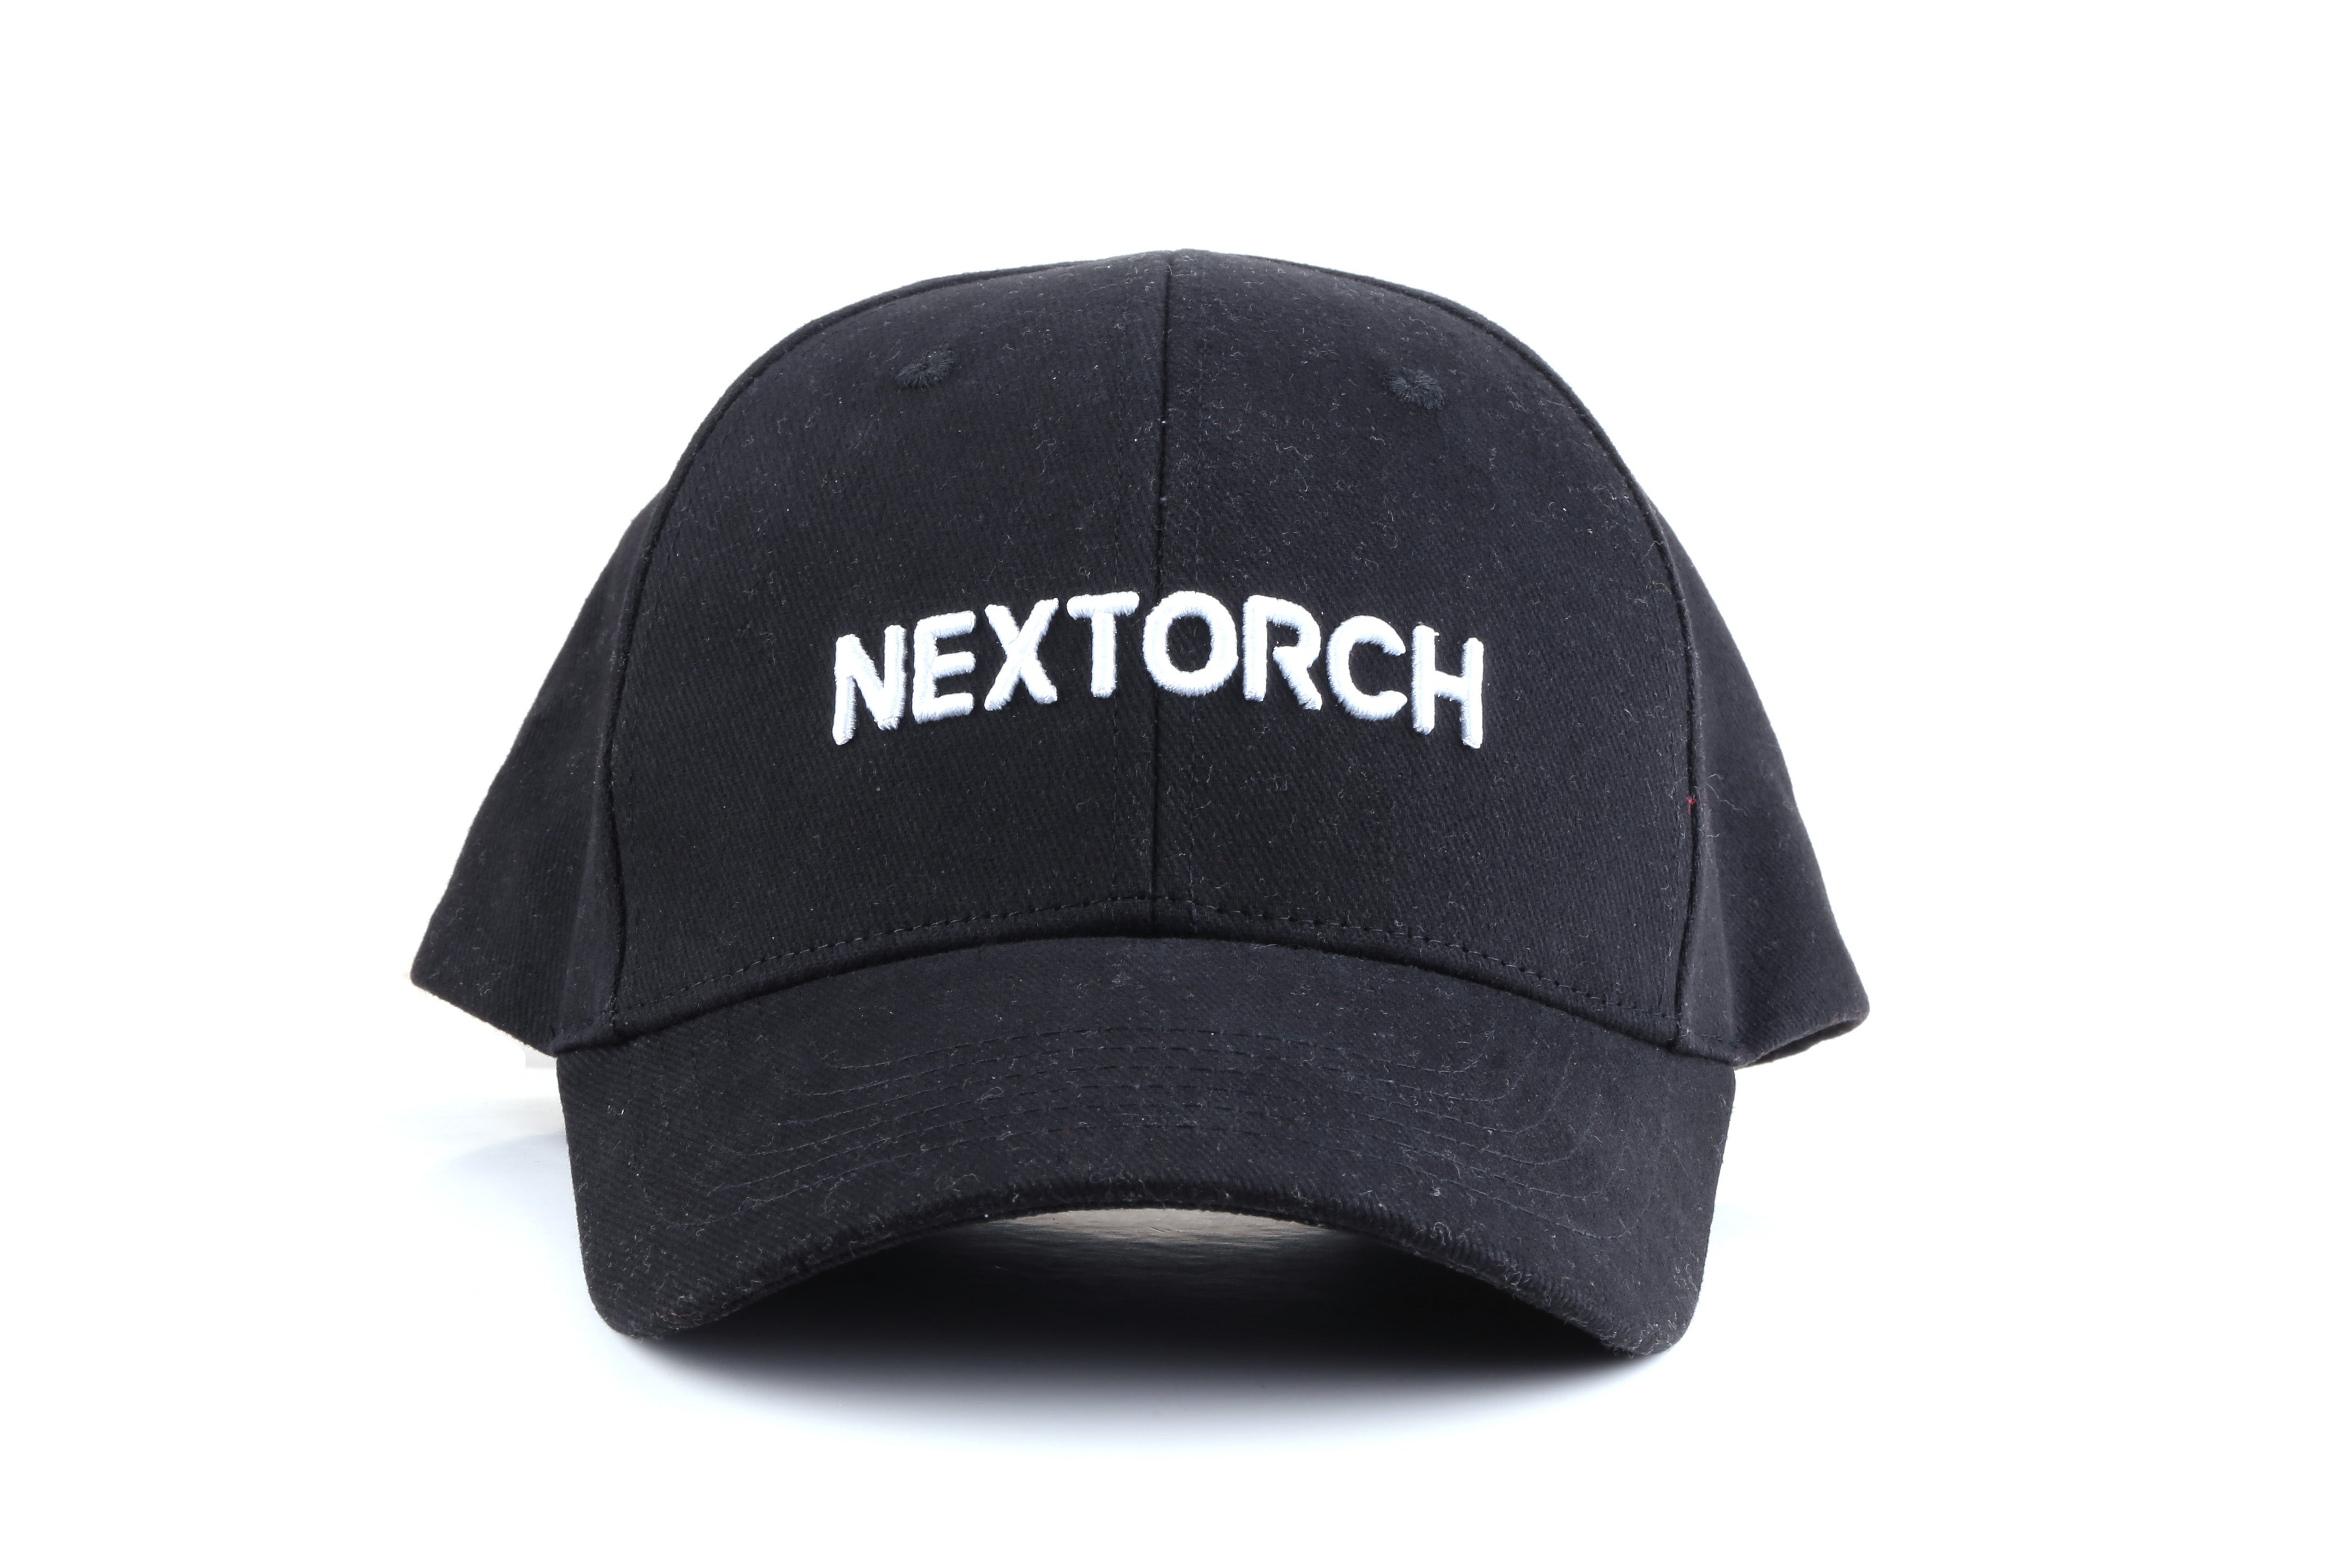 Nextorch's logo-embroidered Cap